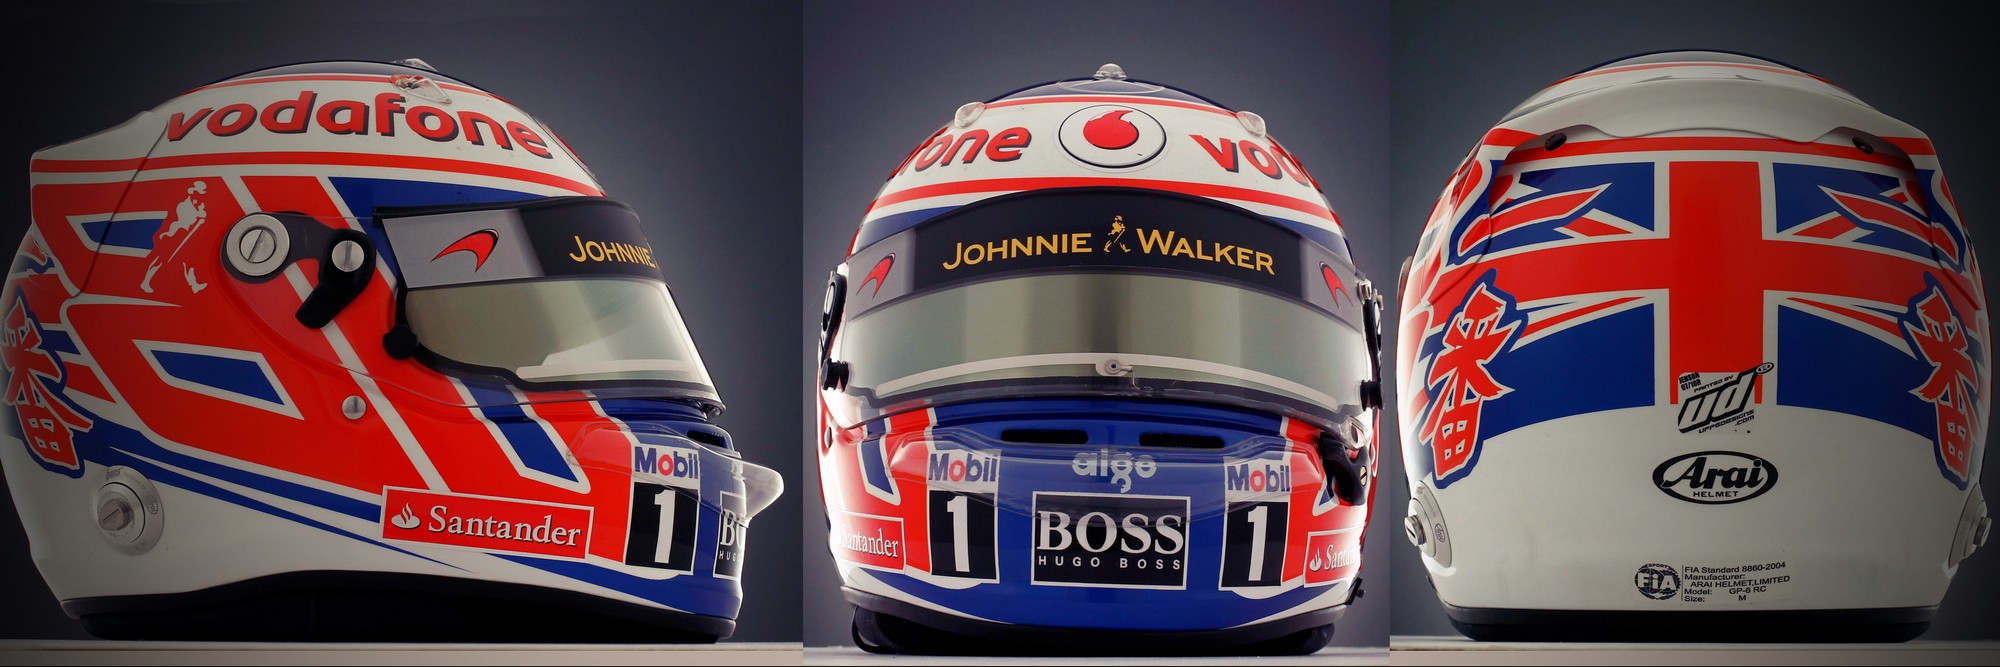 Шлем Дженсона Баттона на сезон 2011 года | 2011 helmet of Jenson Button